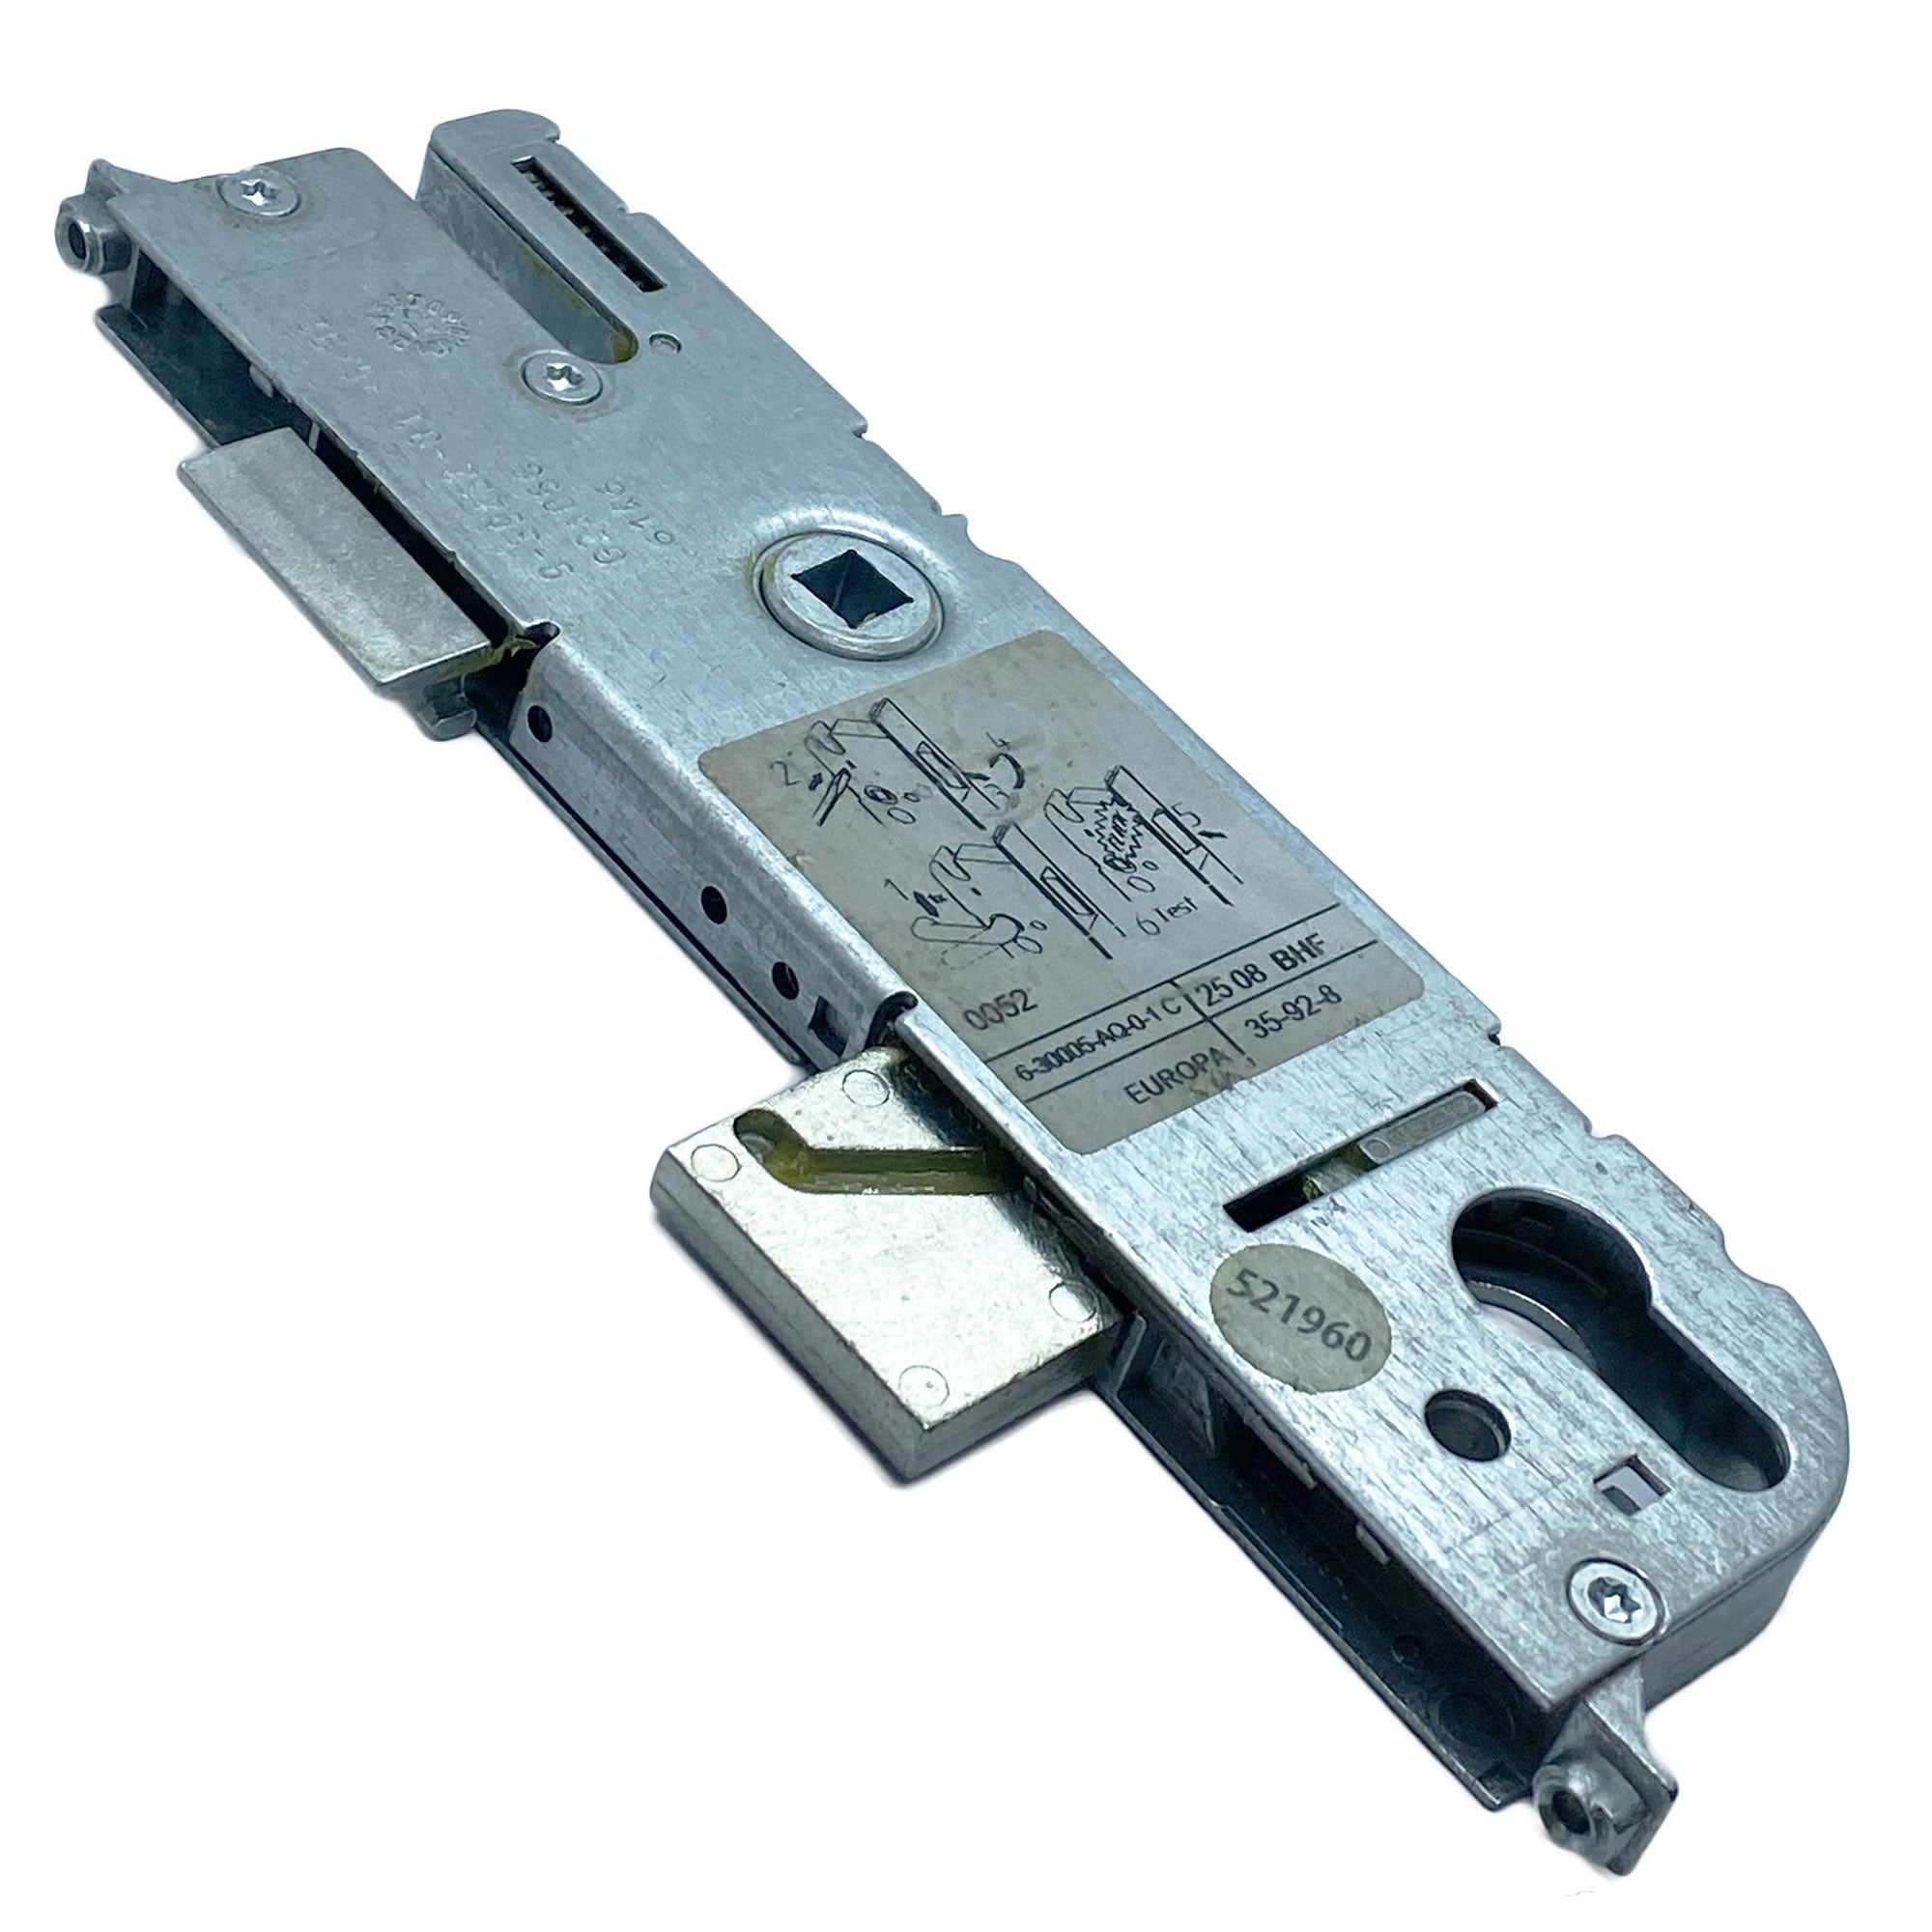 Genuine Gu Door Lock Gearbox Gu Multi Point Upvc Door Lock 35mm 92mm New Style Lock